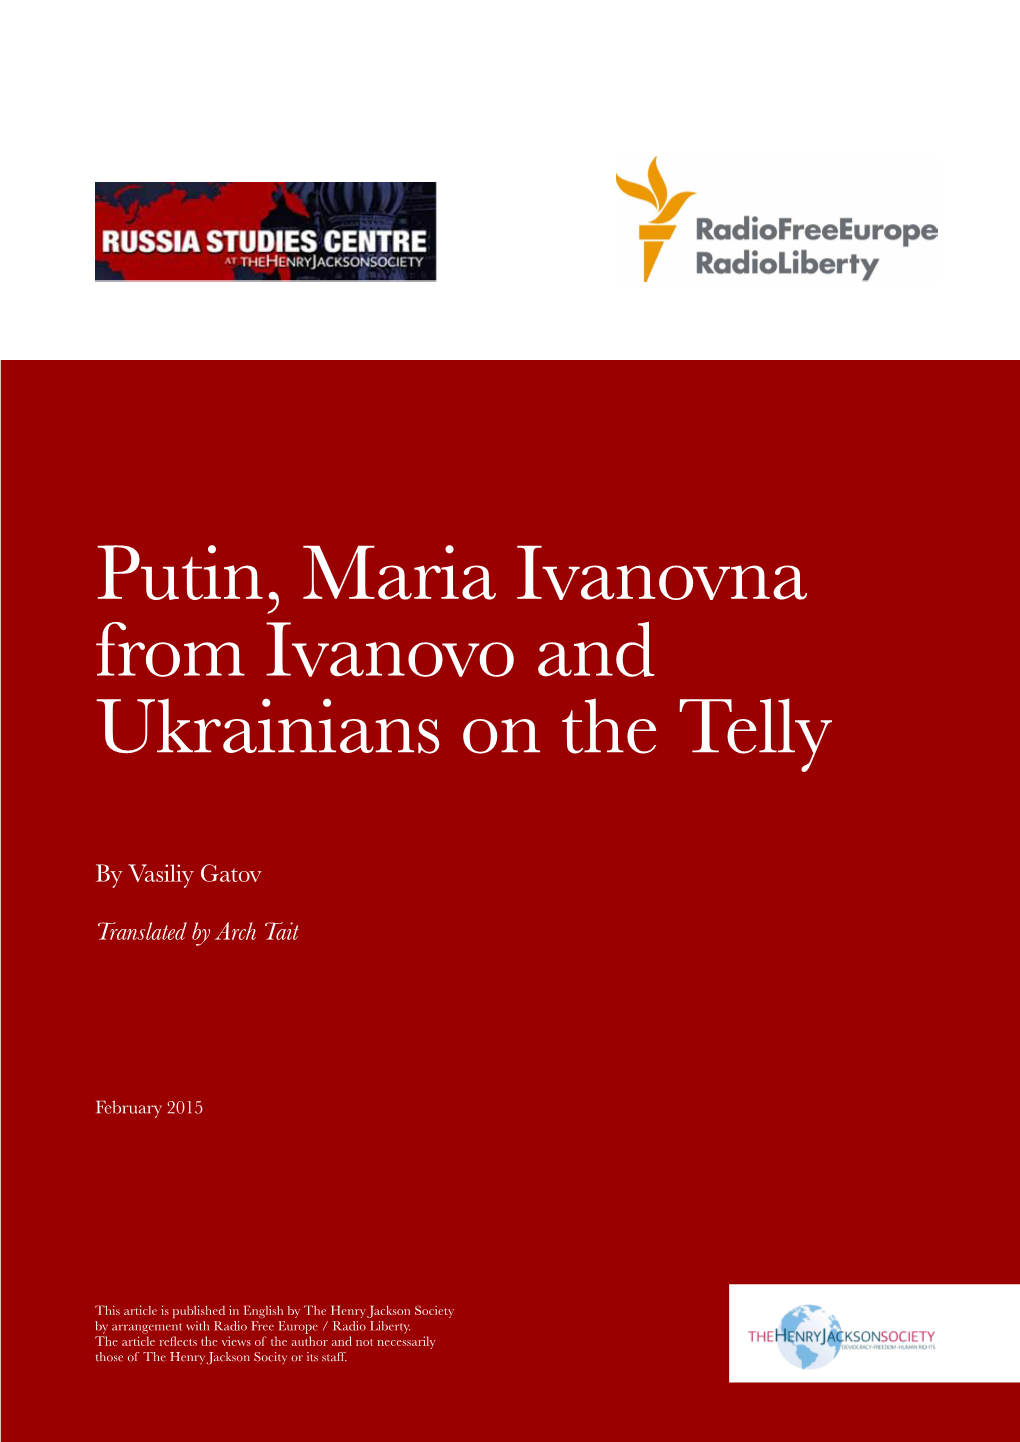 Putin, Maria Ivanovna from Ivanovo and Ukrainians on the Telly